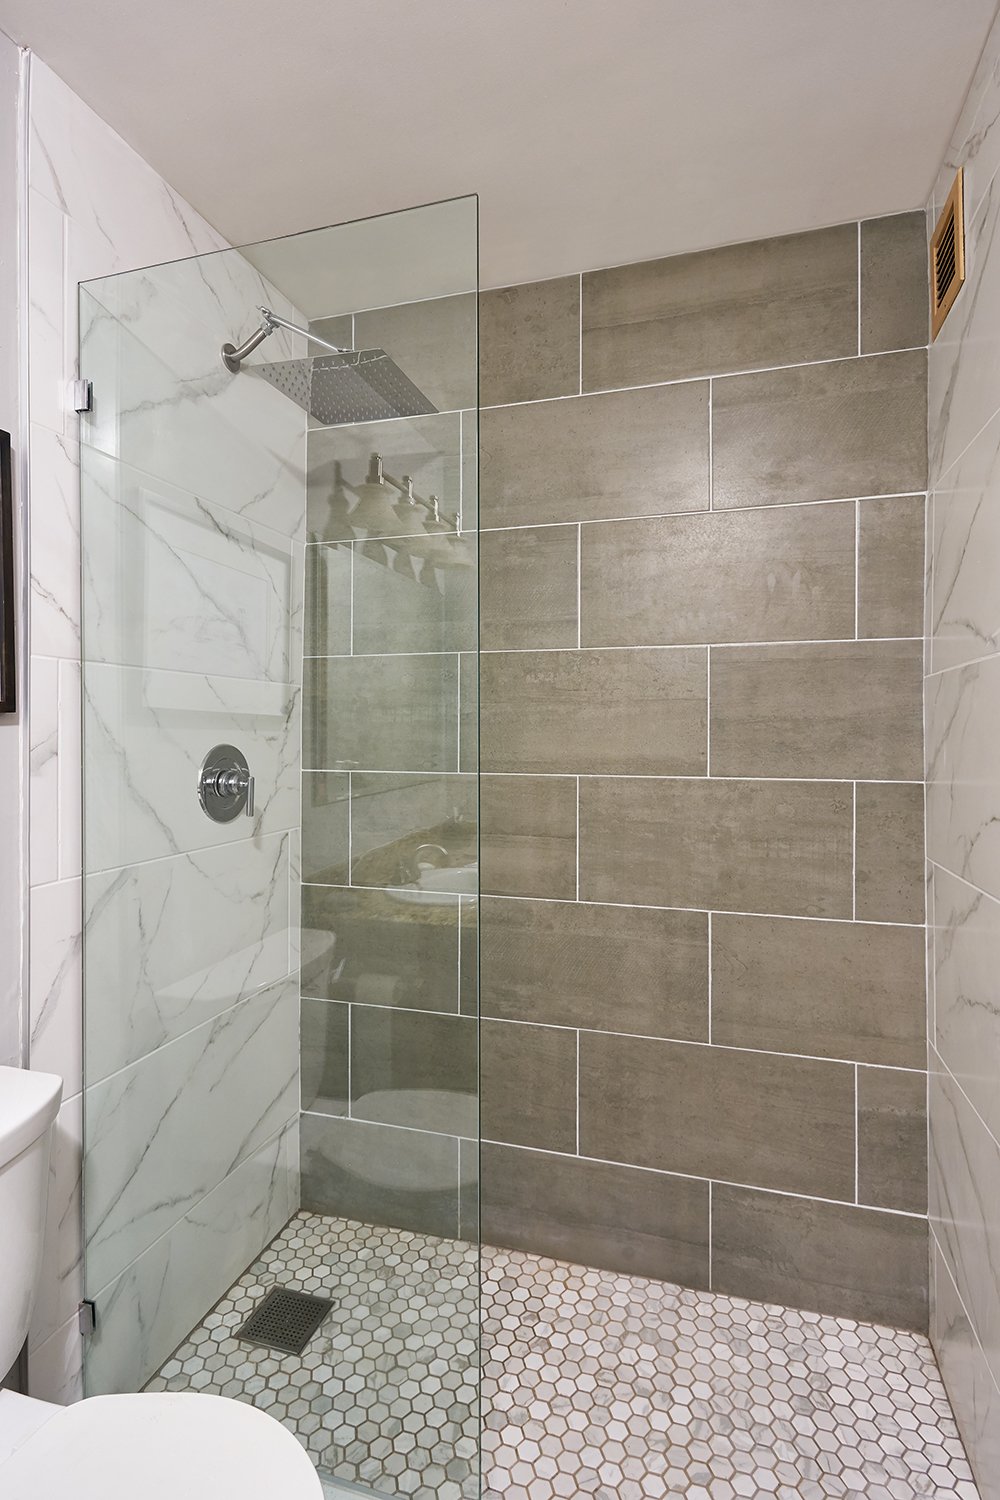 Bathroom shower with gray oversized tile and rainhead shower head